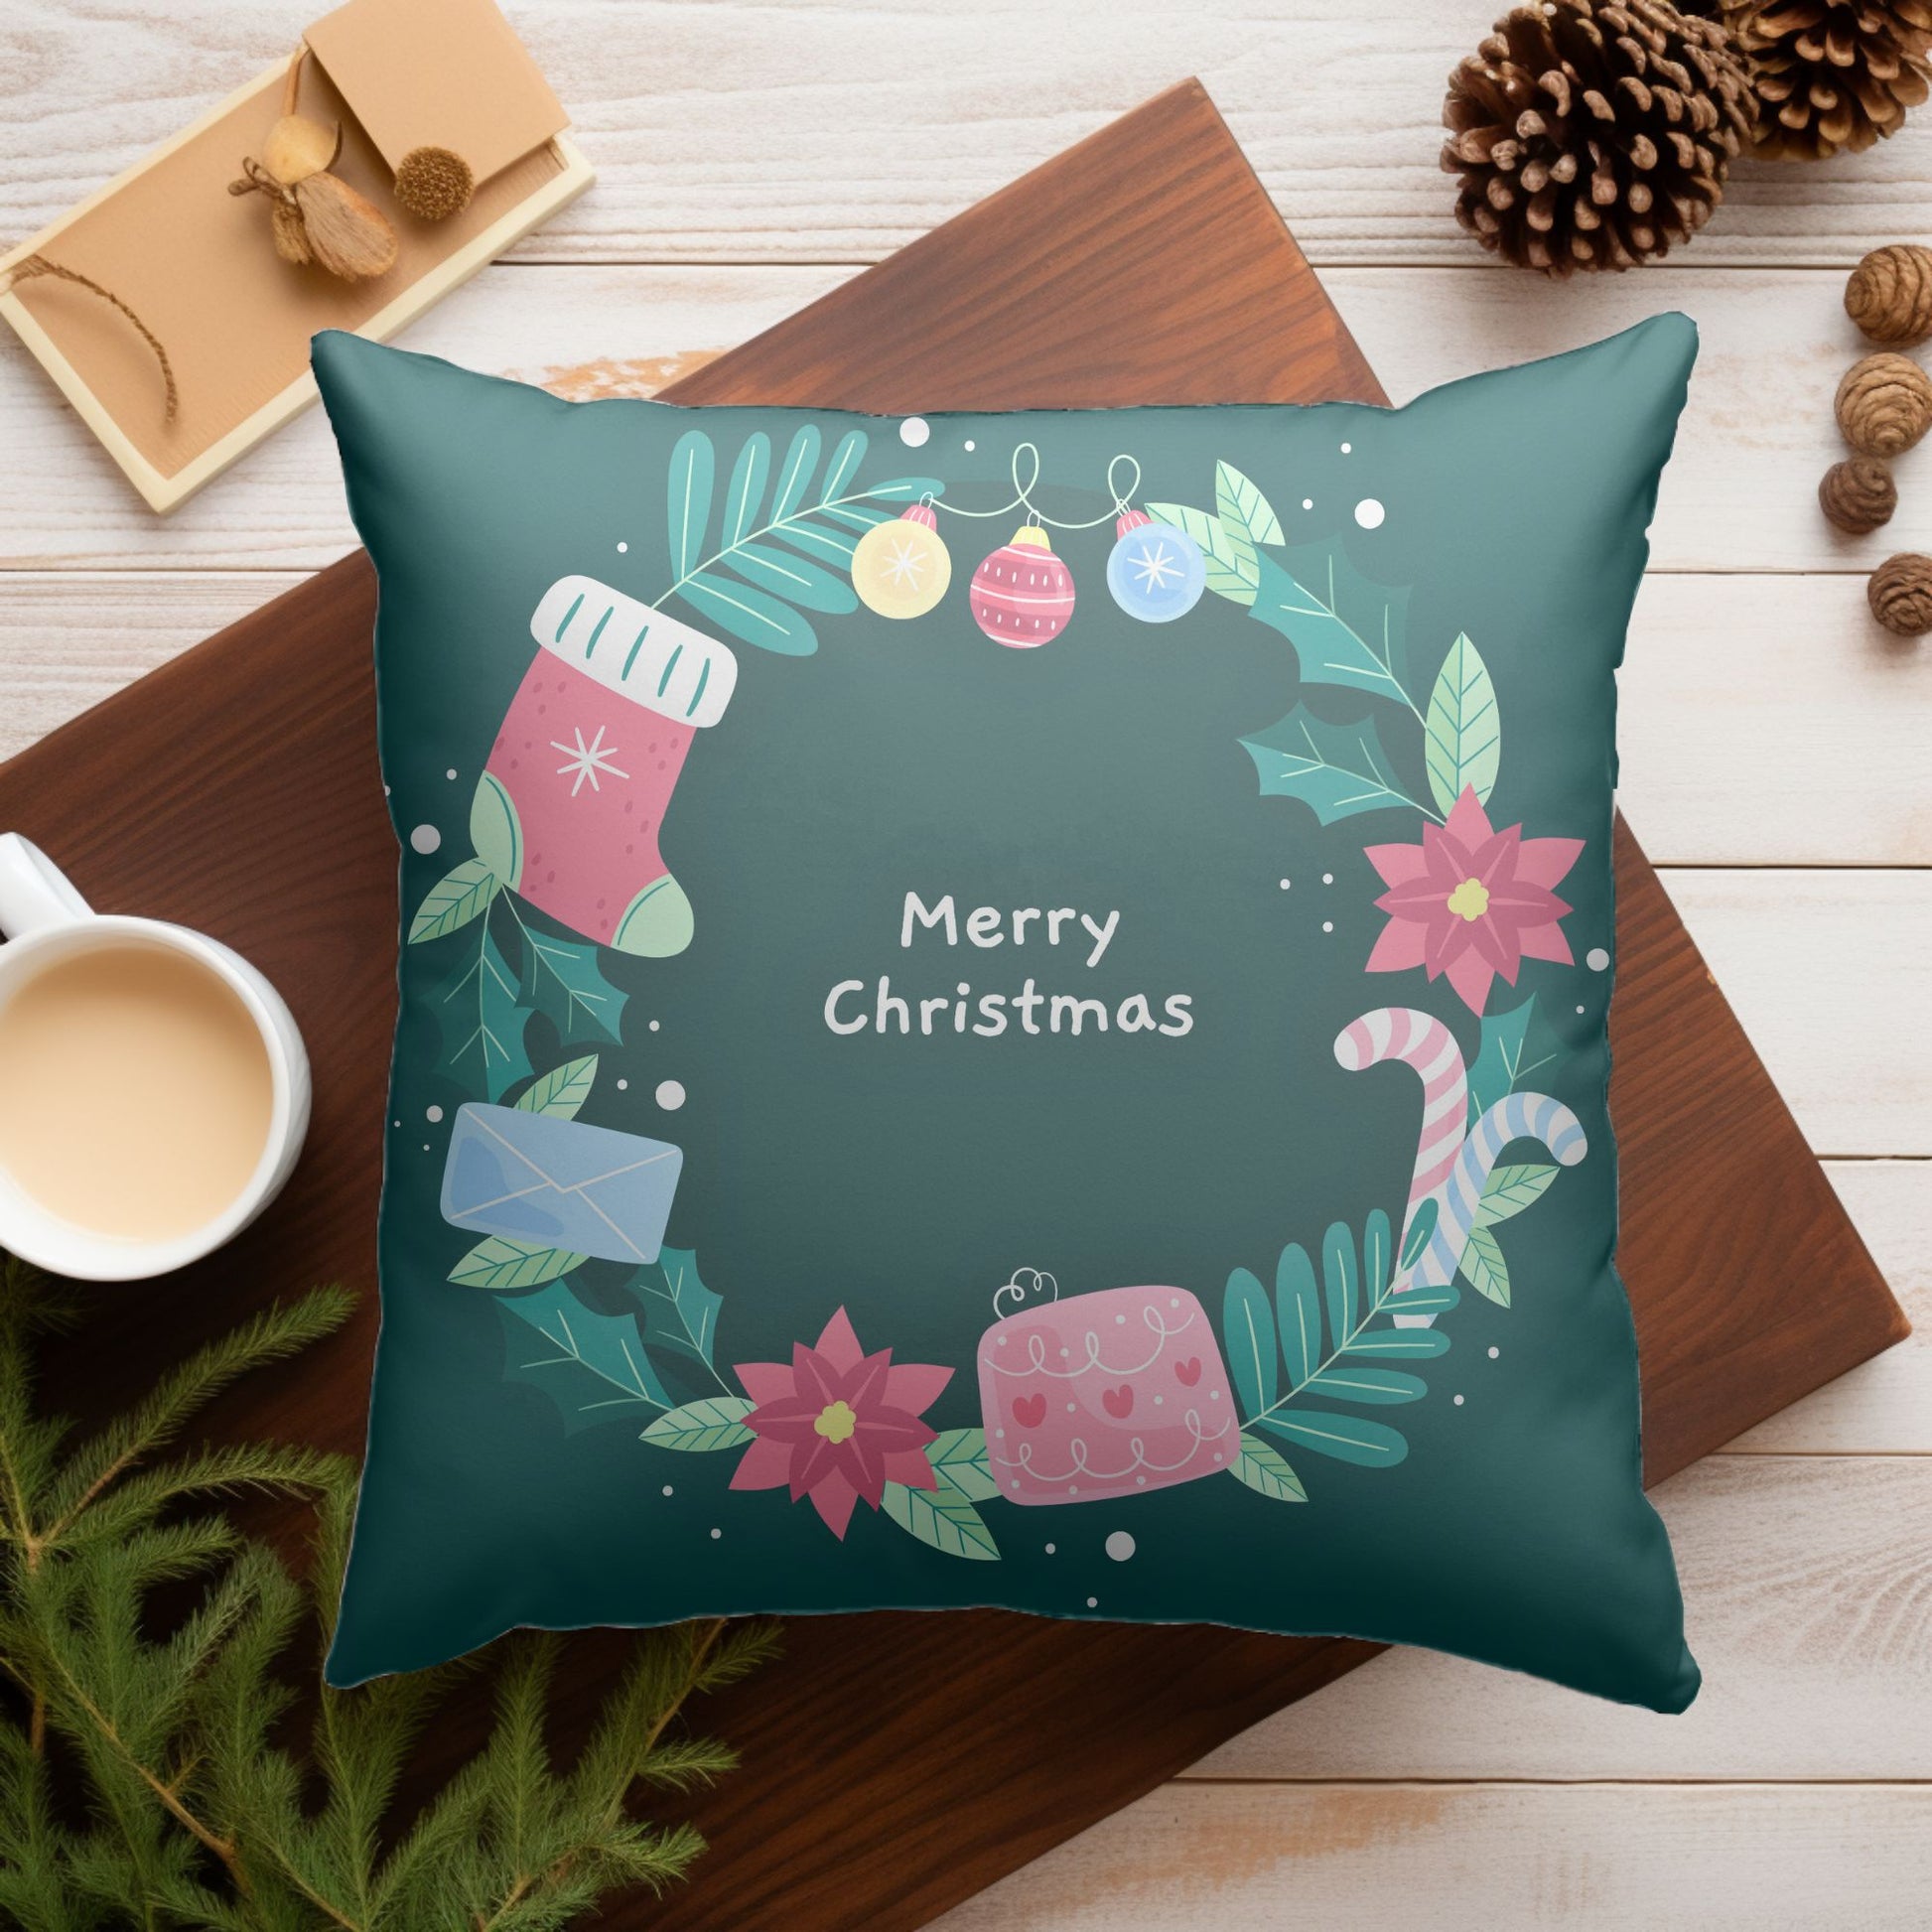 Merry Christmas Home Welcome' festive throw pillow